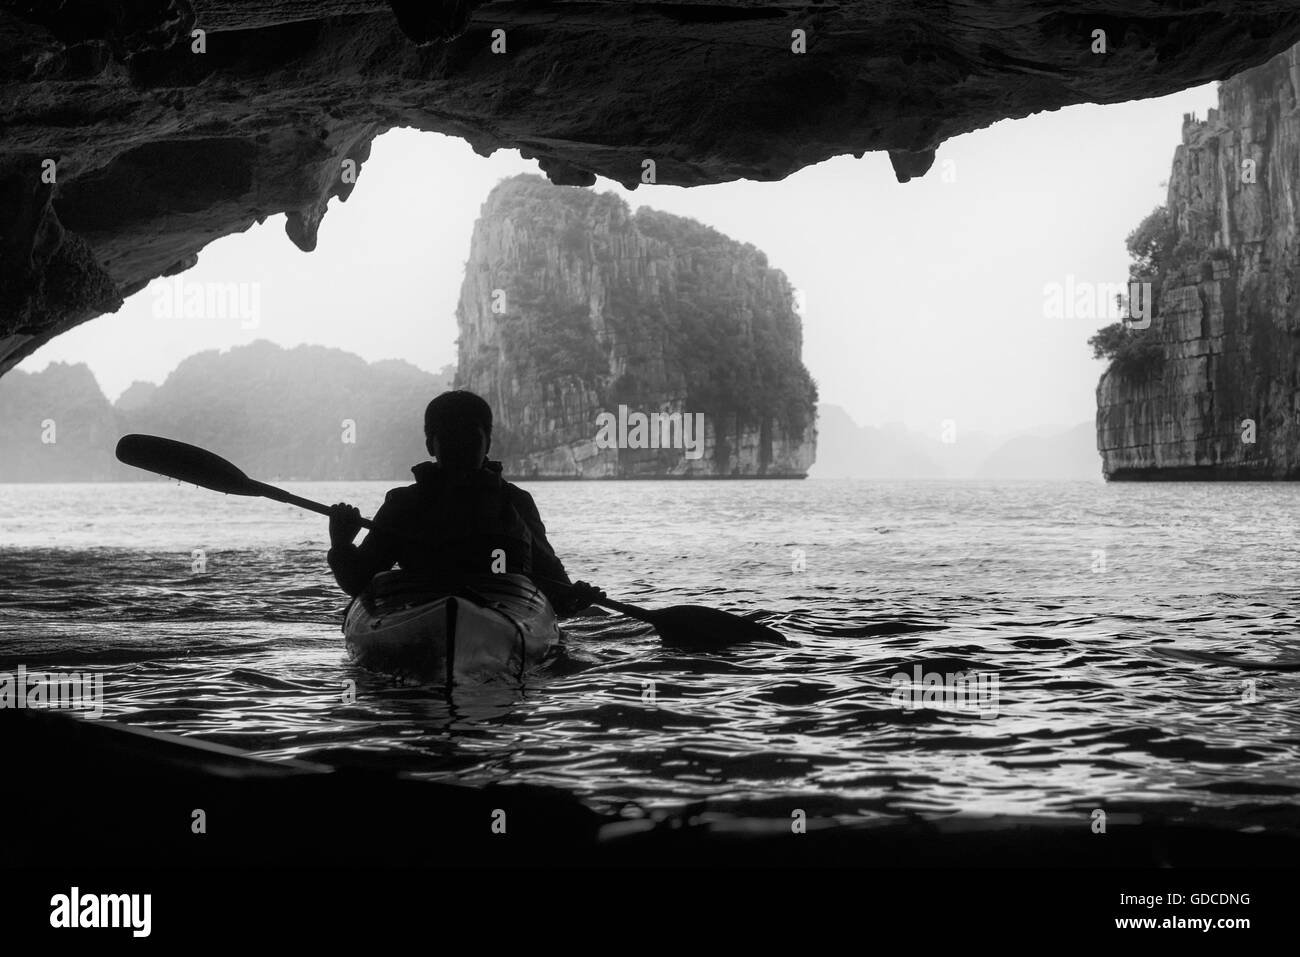 Kayaking in a cave in Ha Long Bay, Vietnam Stock Photo